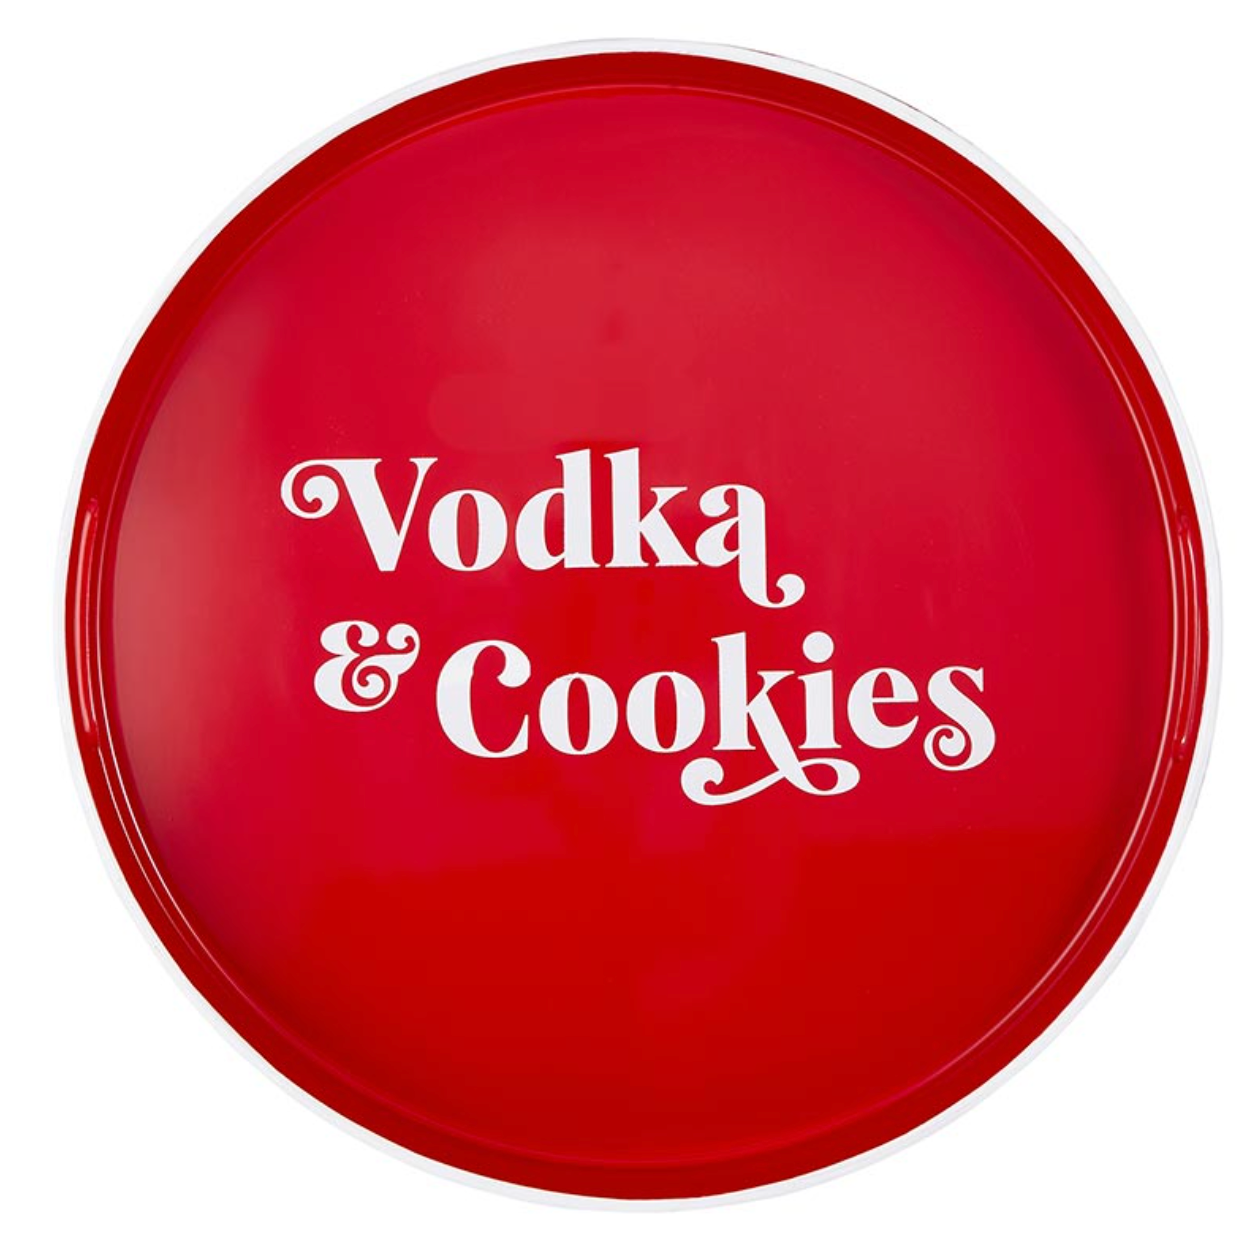 Vodka & Cookies Serving Tray